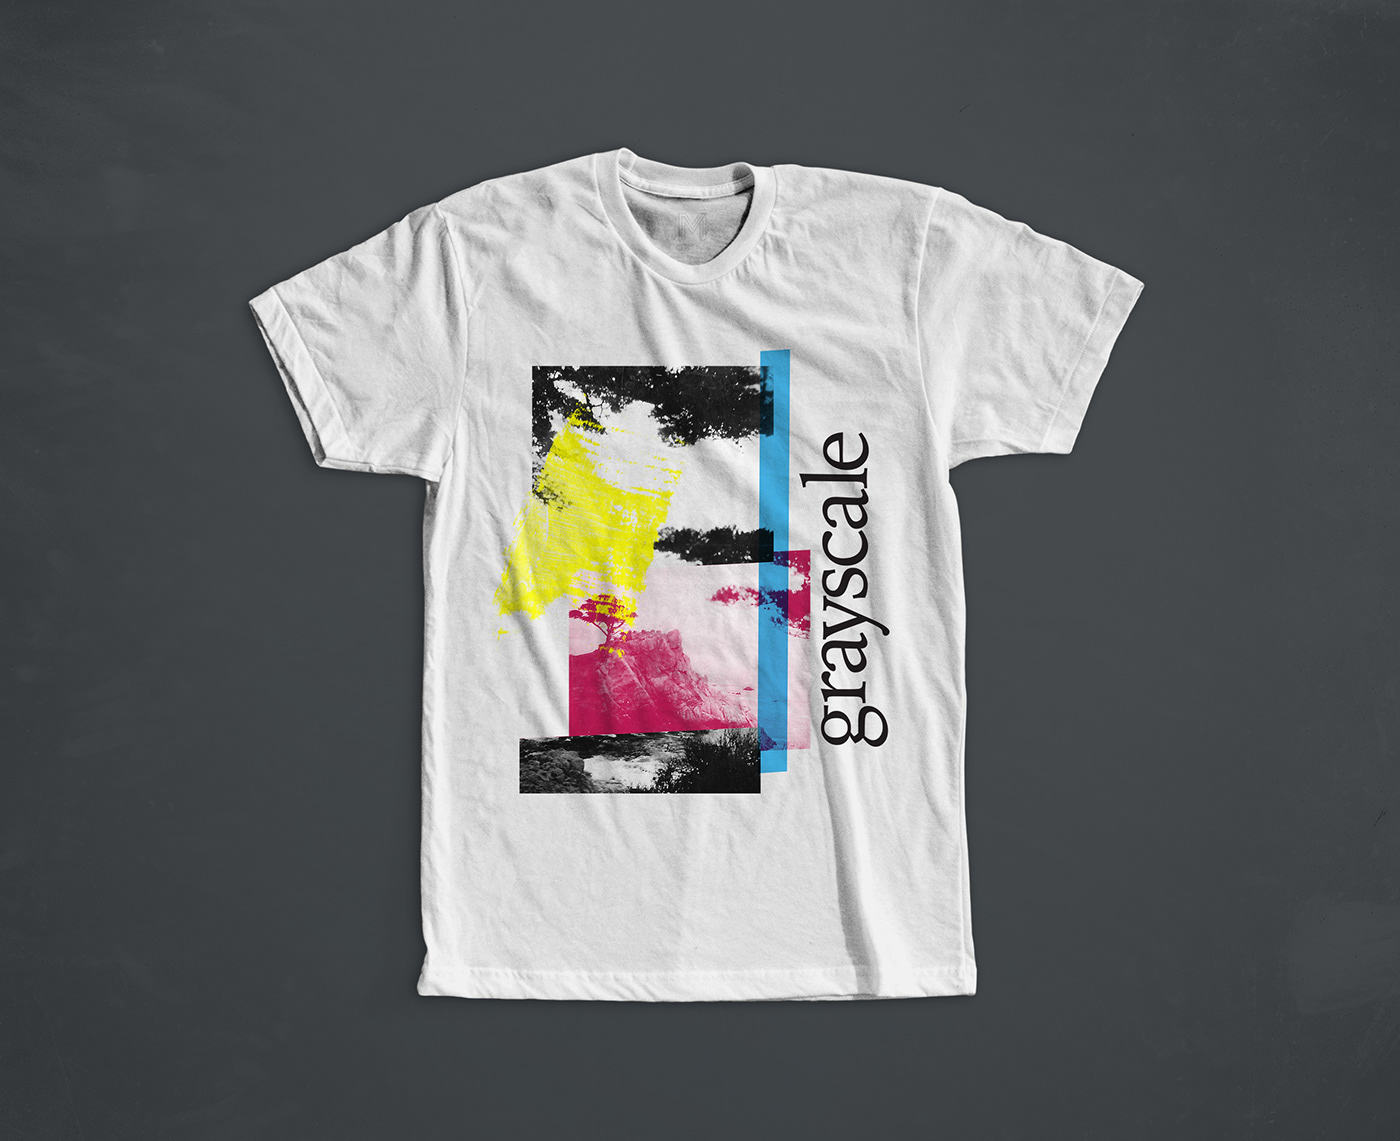 apparel band tee Merch music t-shirt